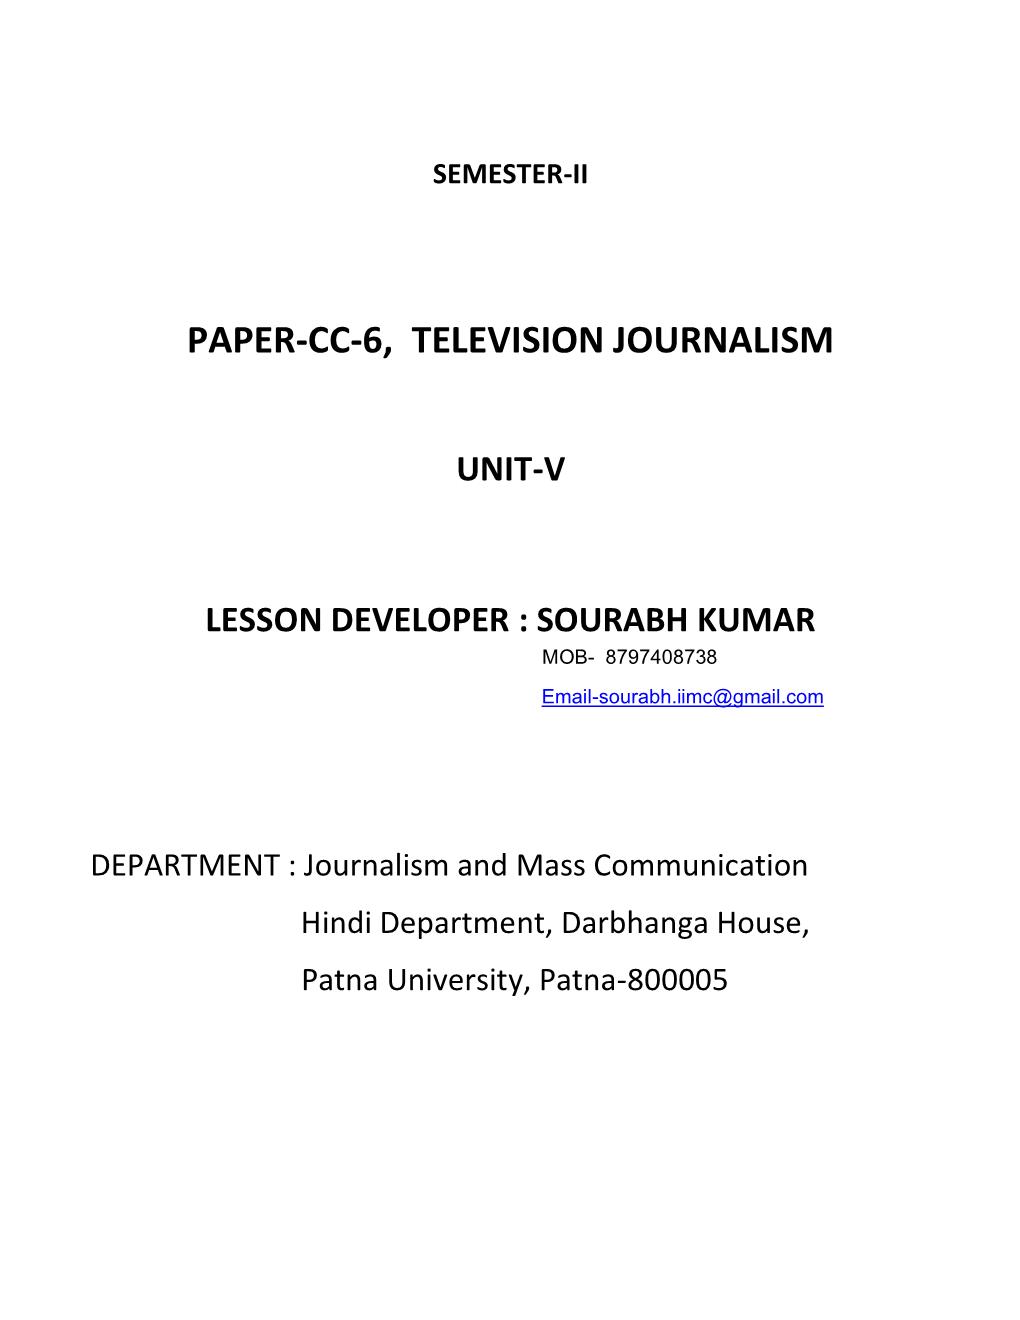 Paper-Cc-6, Television Journalism